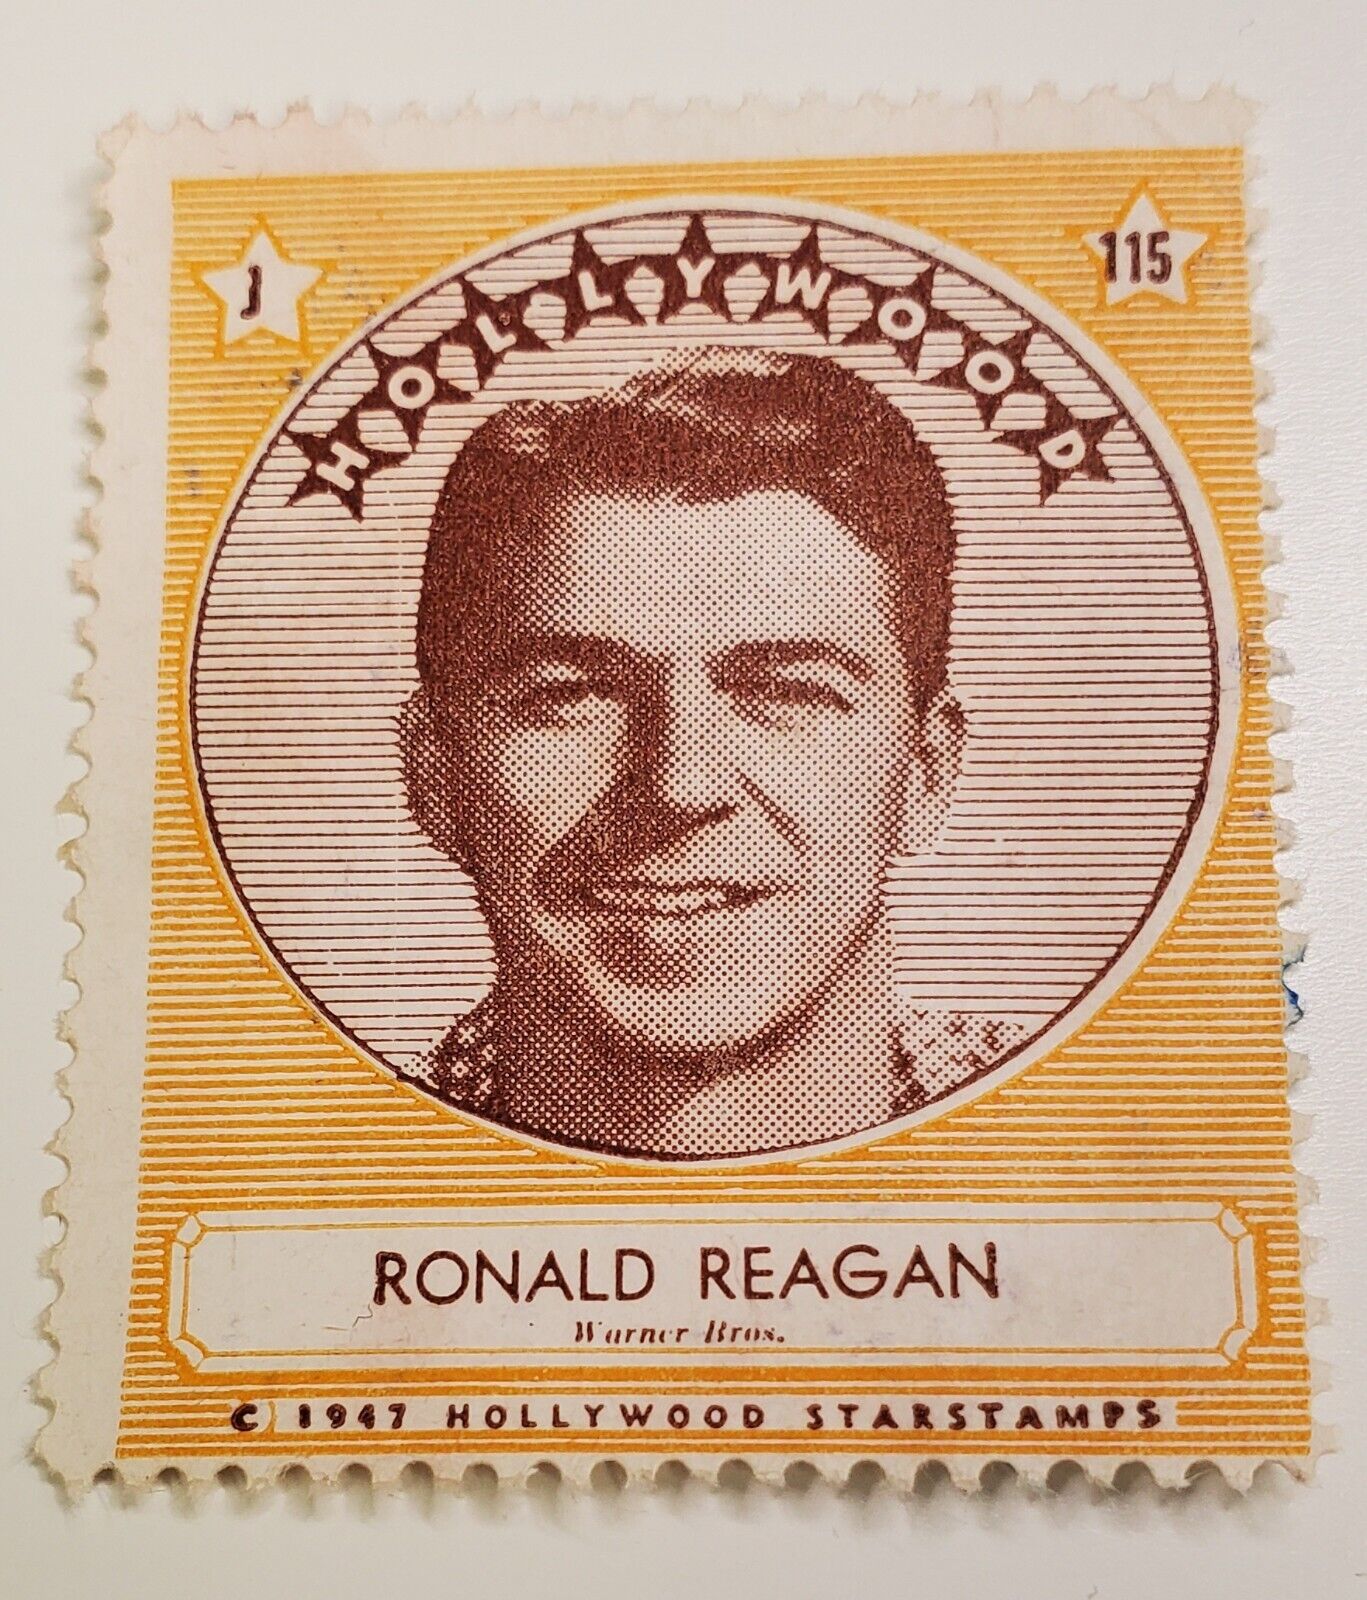 Ronald Reagan President 1947 Movie Star Stamp Sticker Trading Card Hollywood